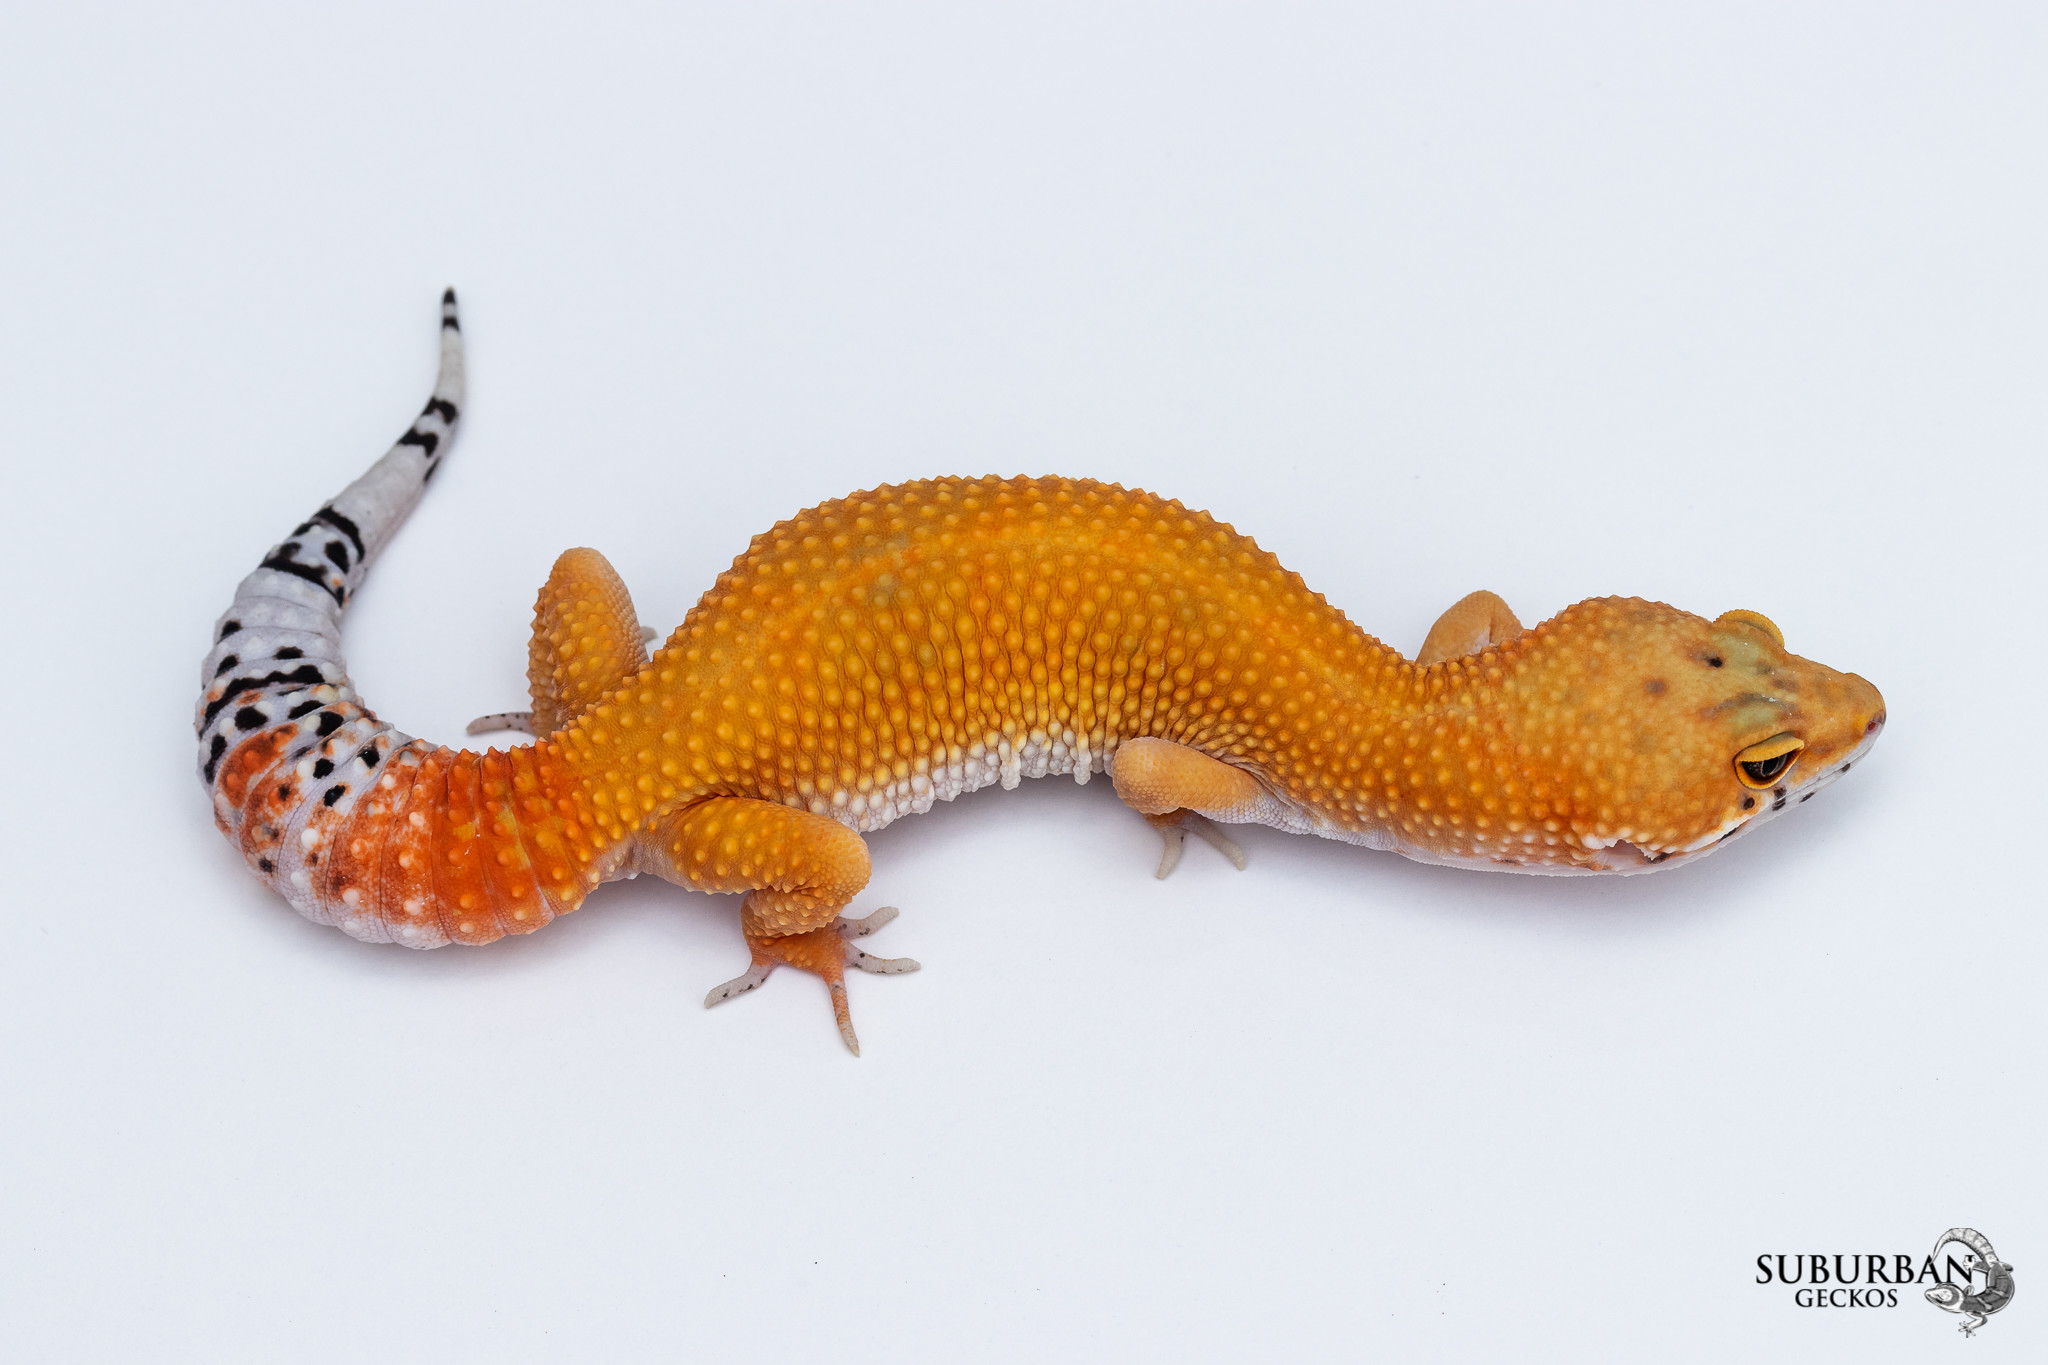 Tangerine Leopard Gecko by Suburban Geckos